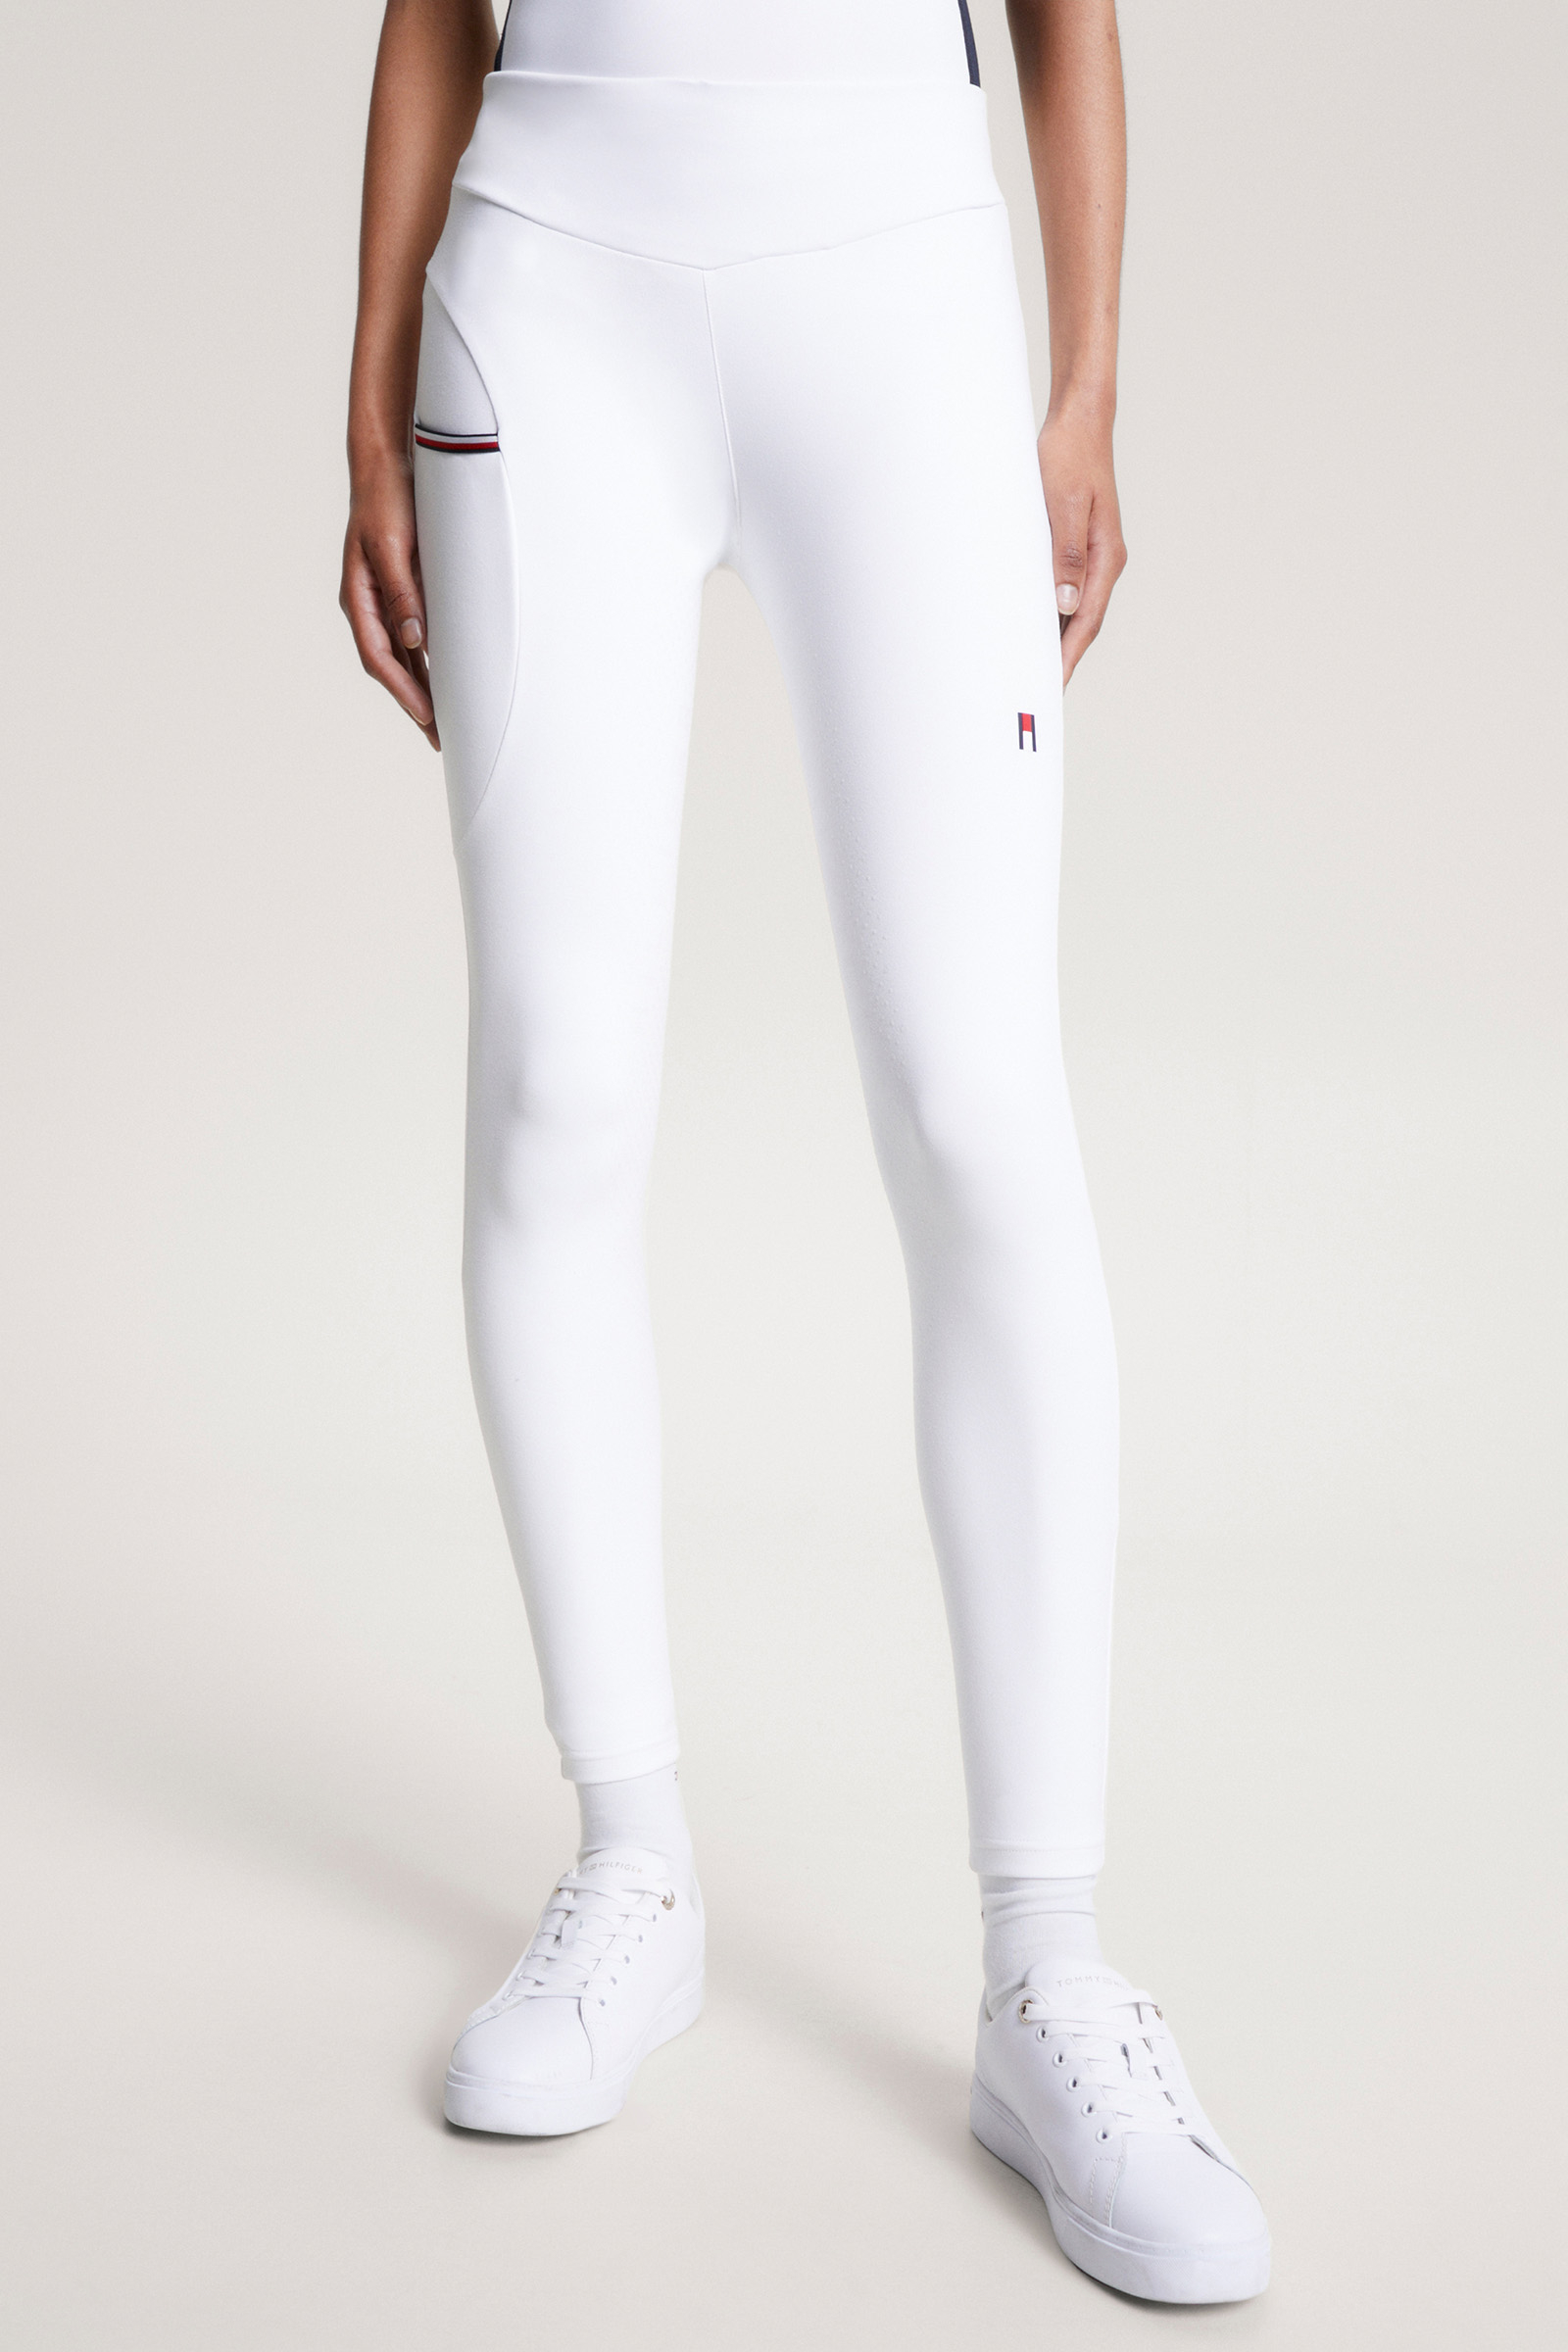 Tommy Hilfiger Sport highwaist logo legging in white